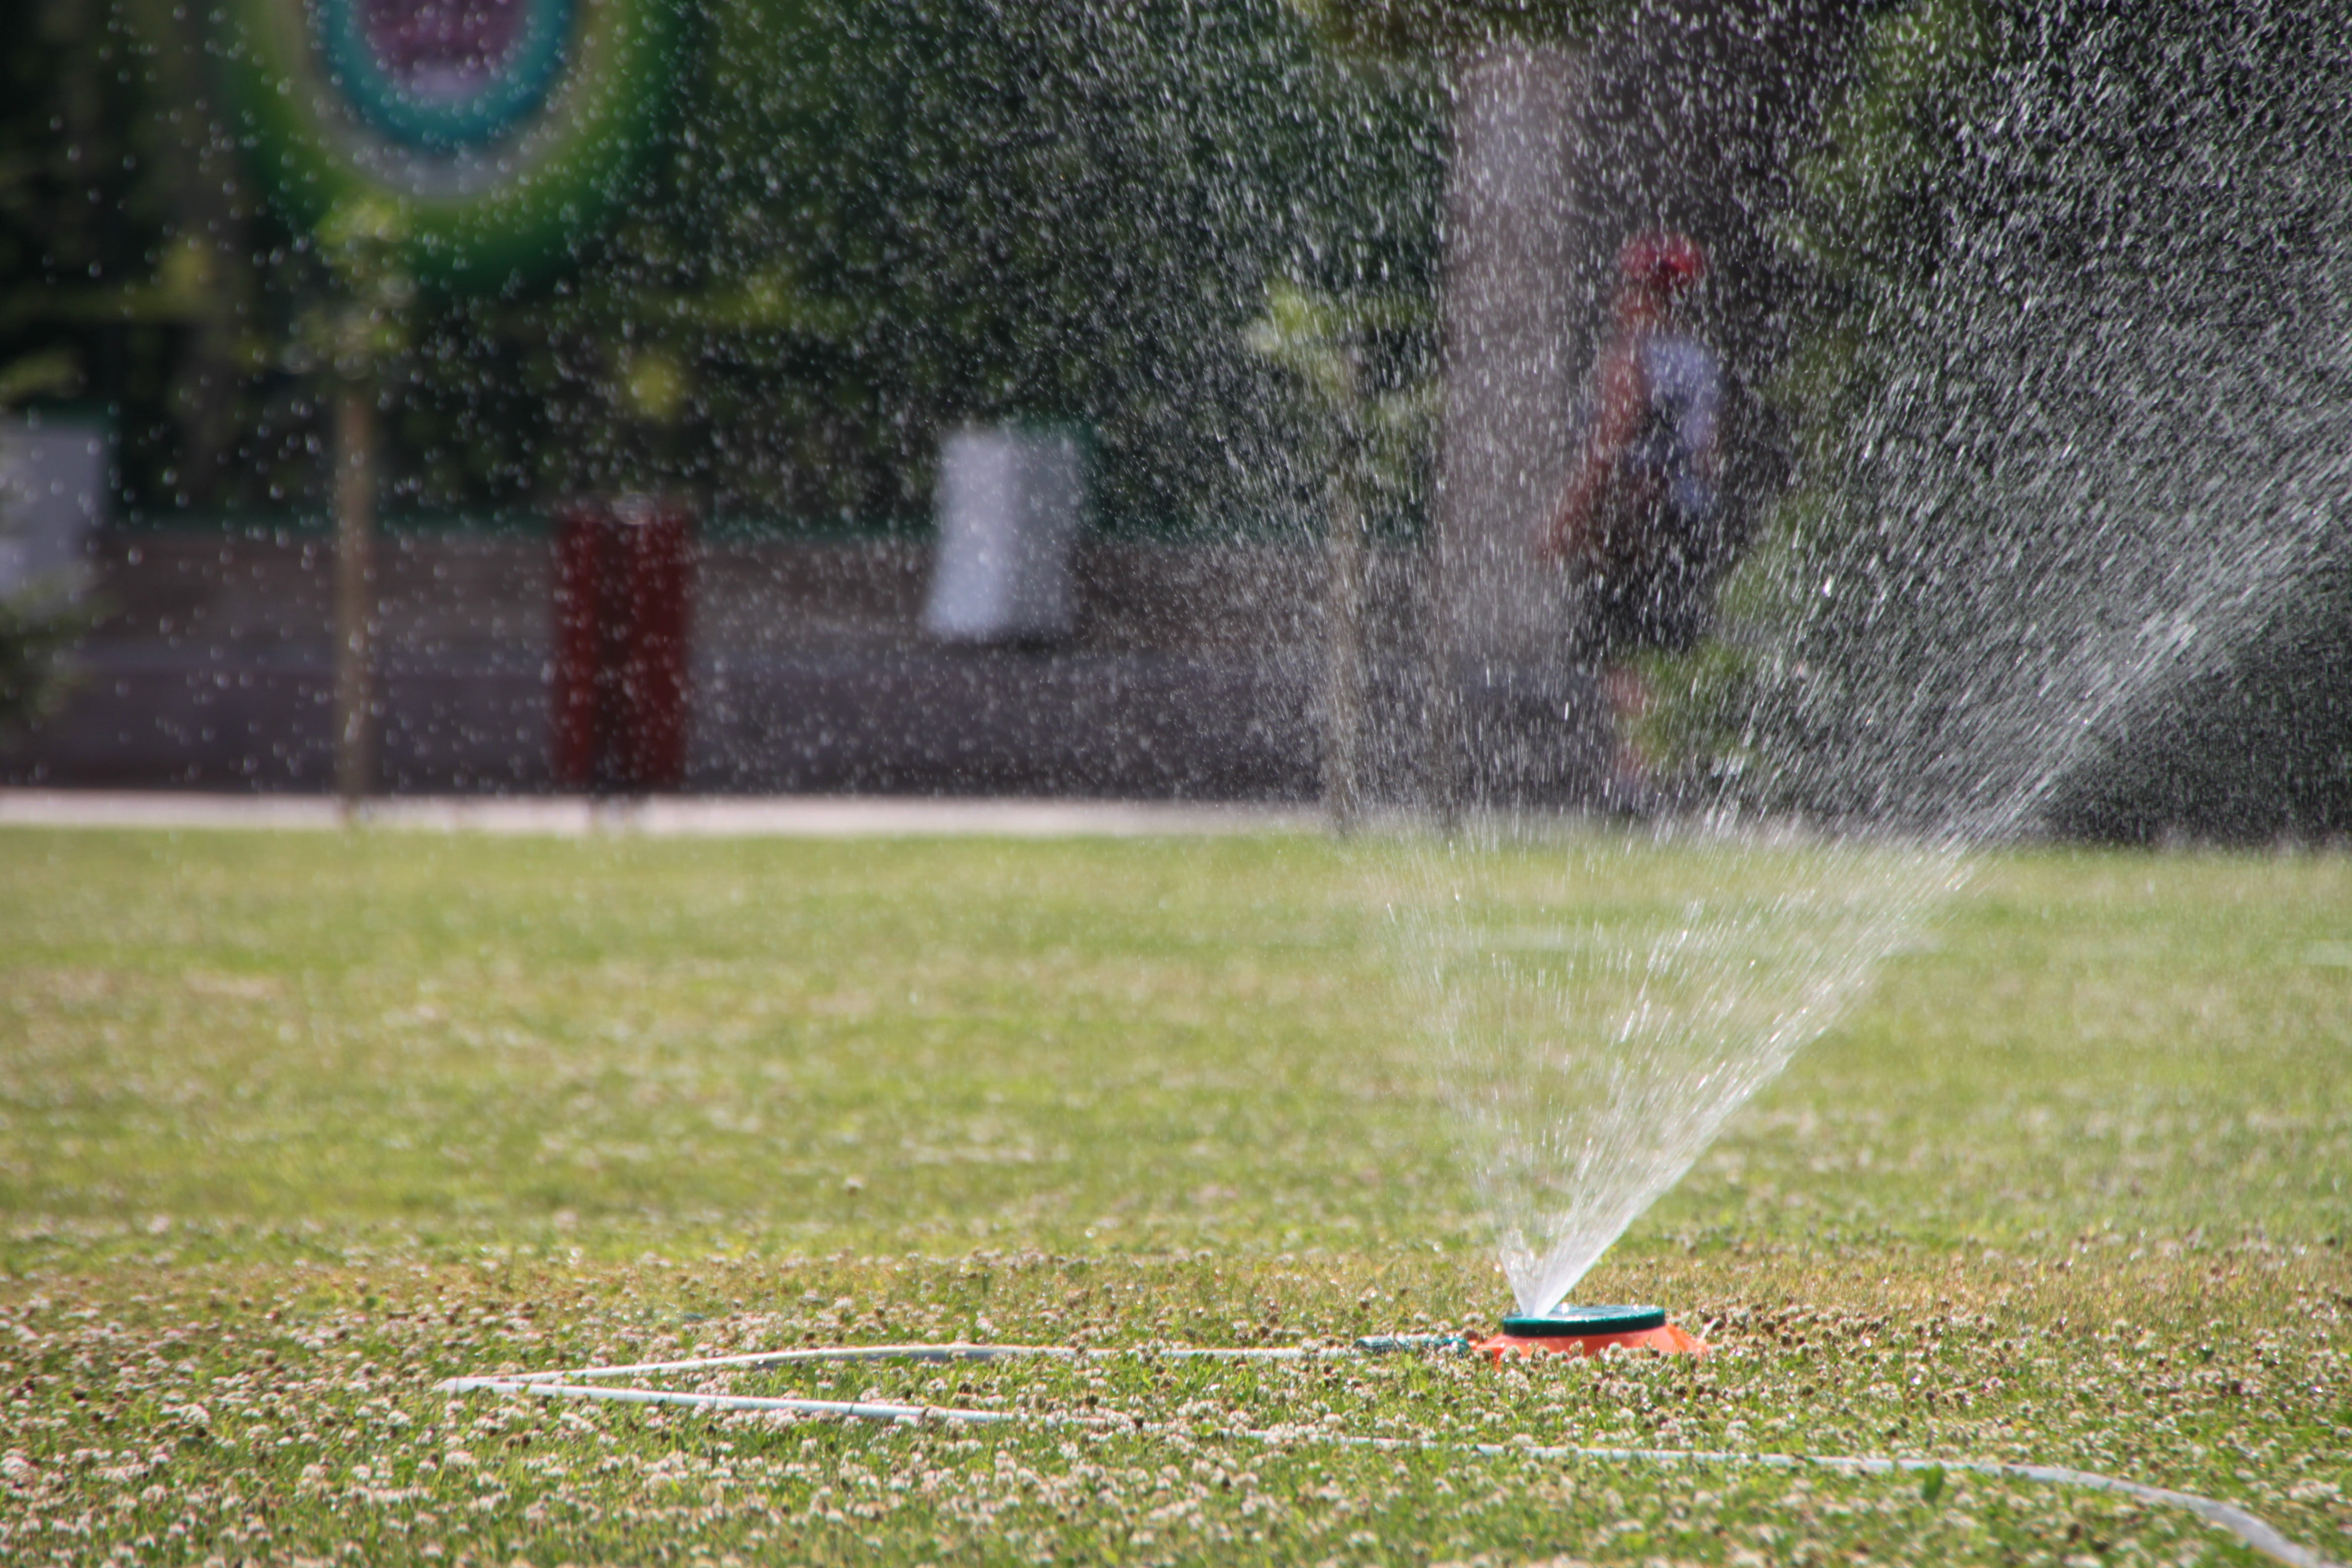 water sprinkler on field at daytime, city, garden, grass, green